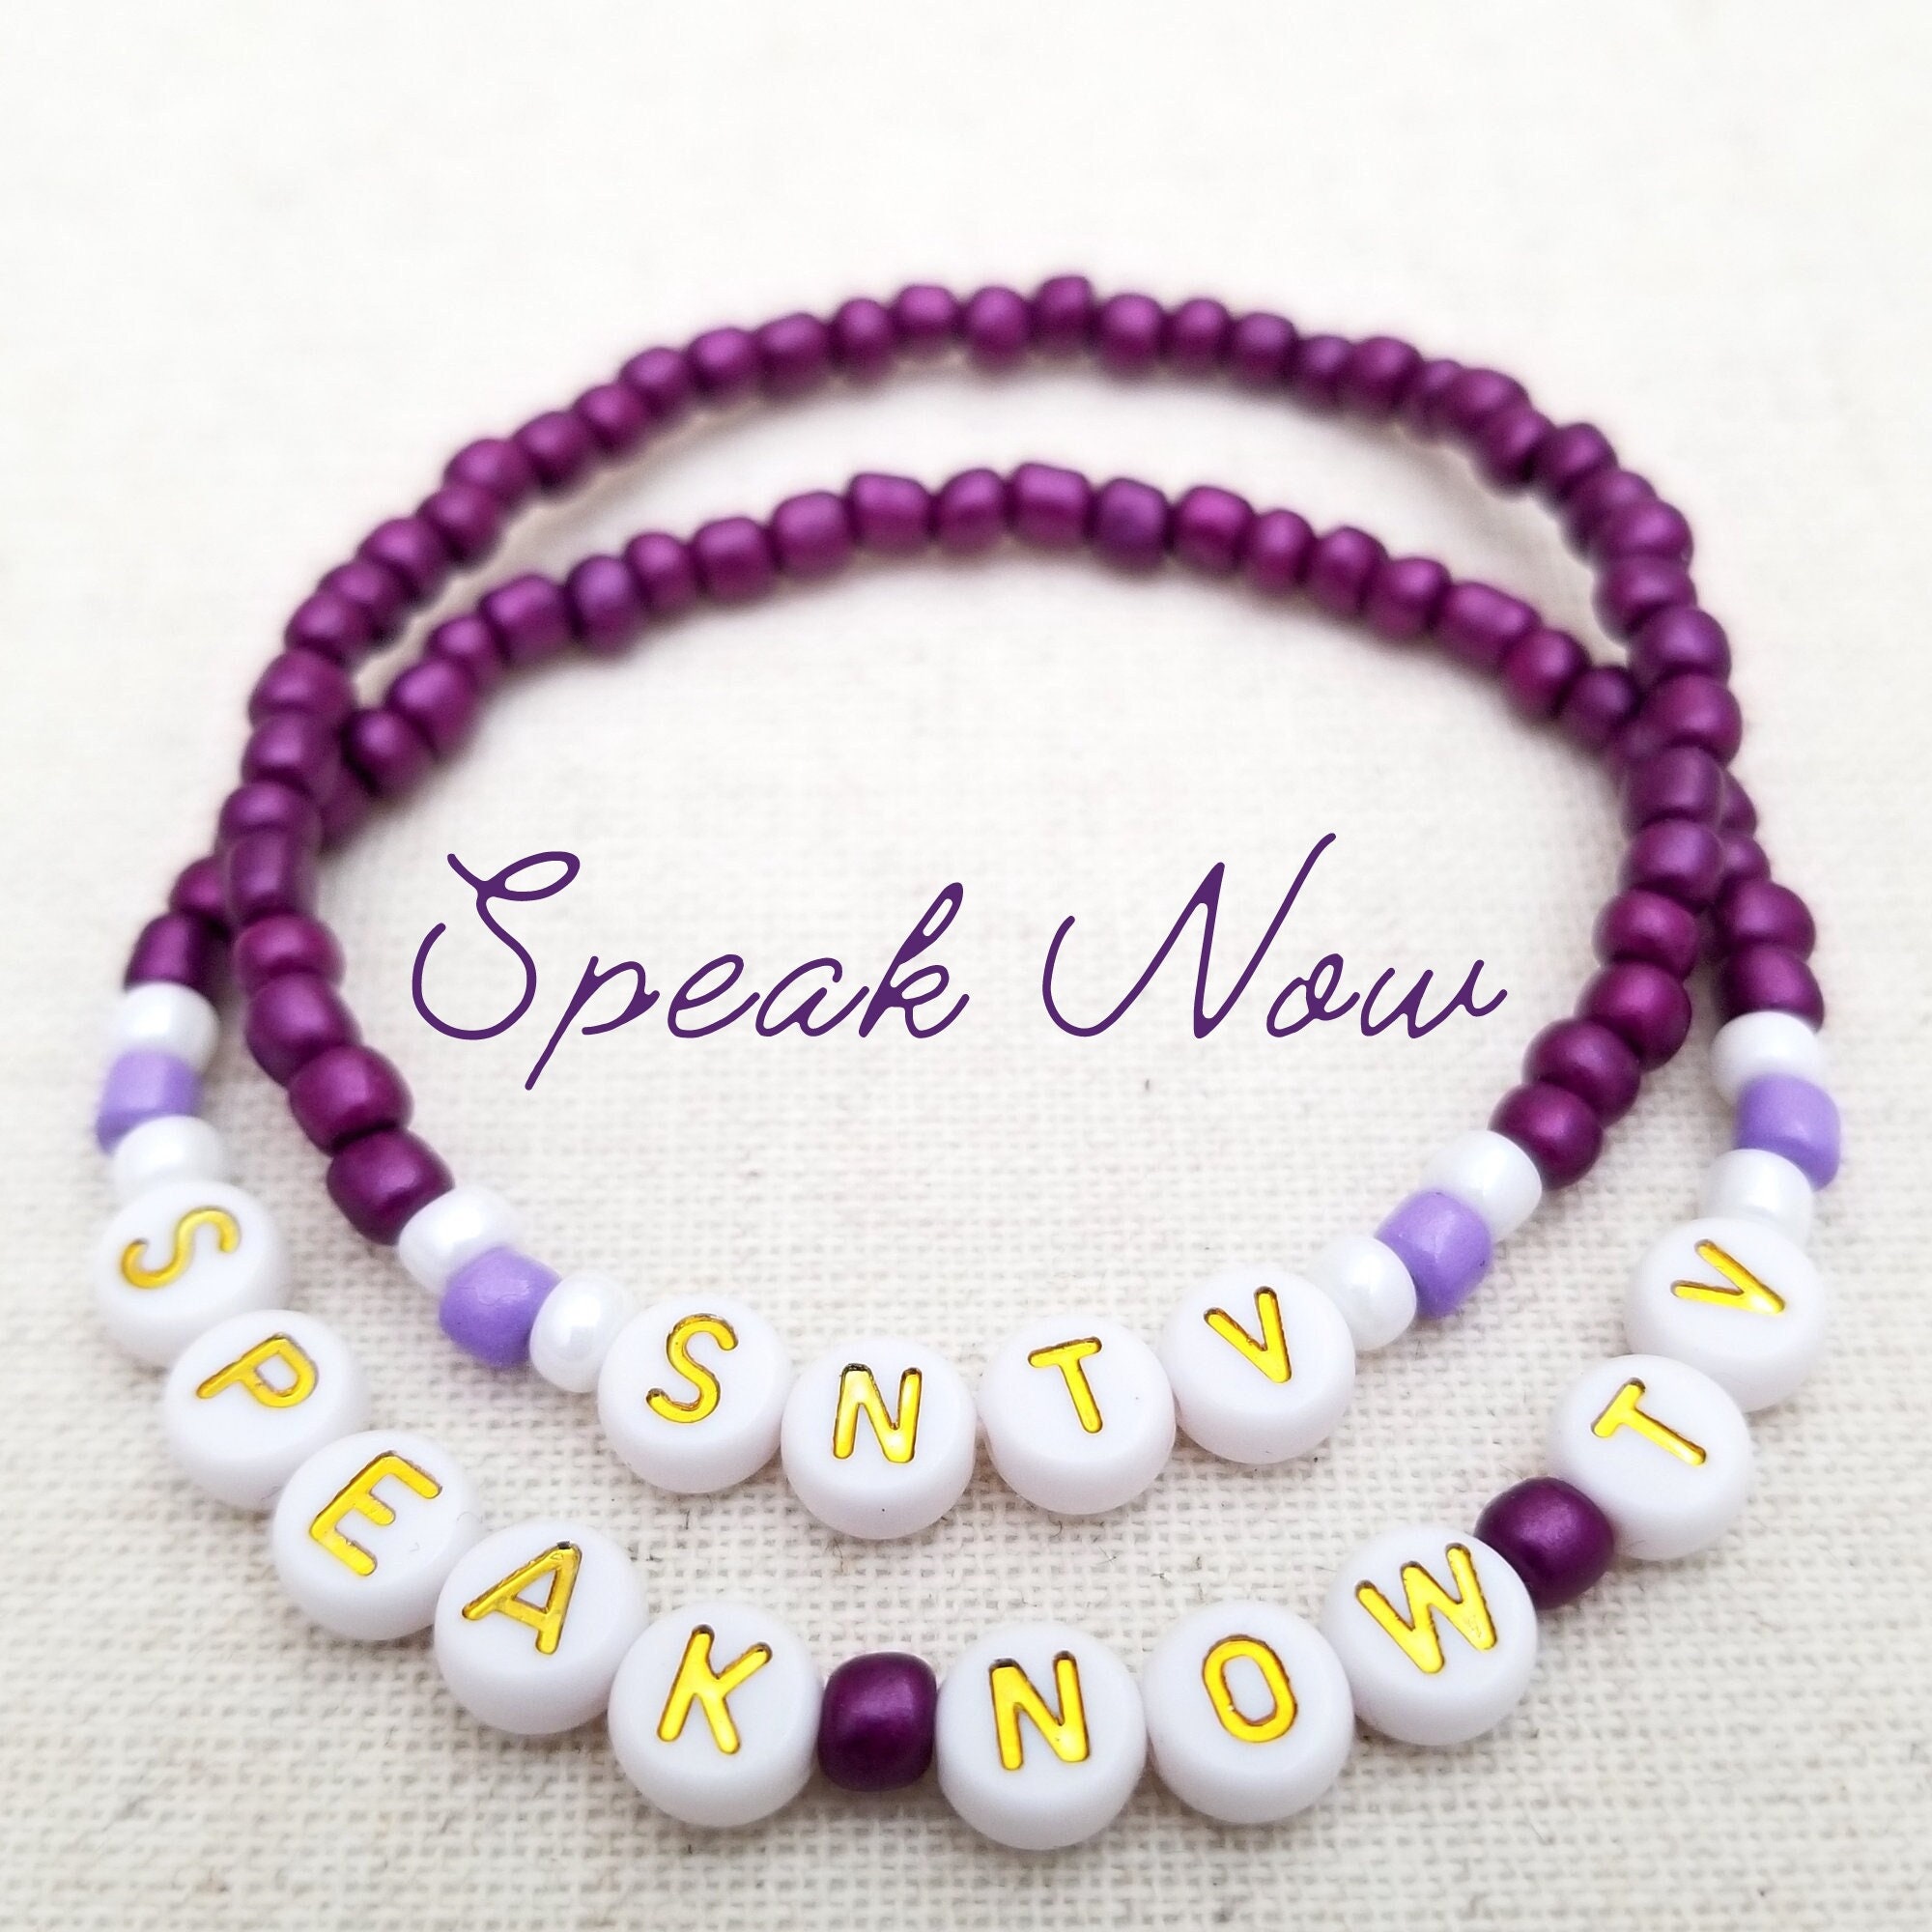 Don't buy speak now charm bracelet : r/SwiftieMerch